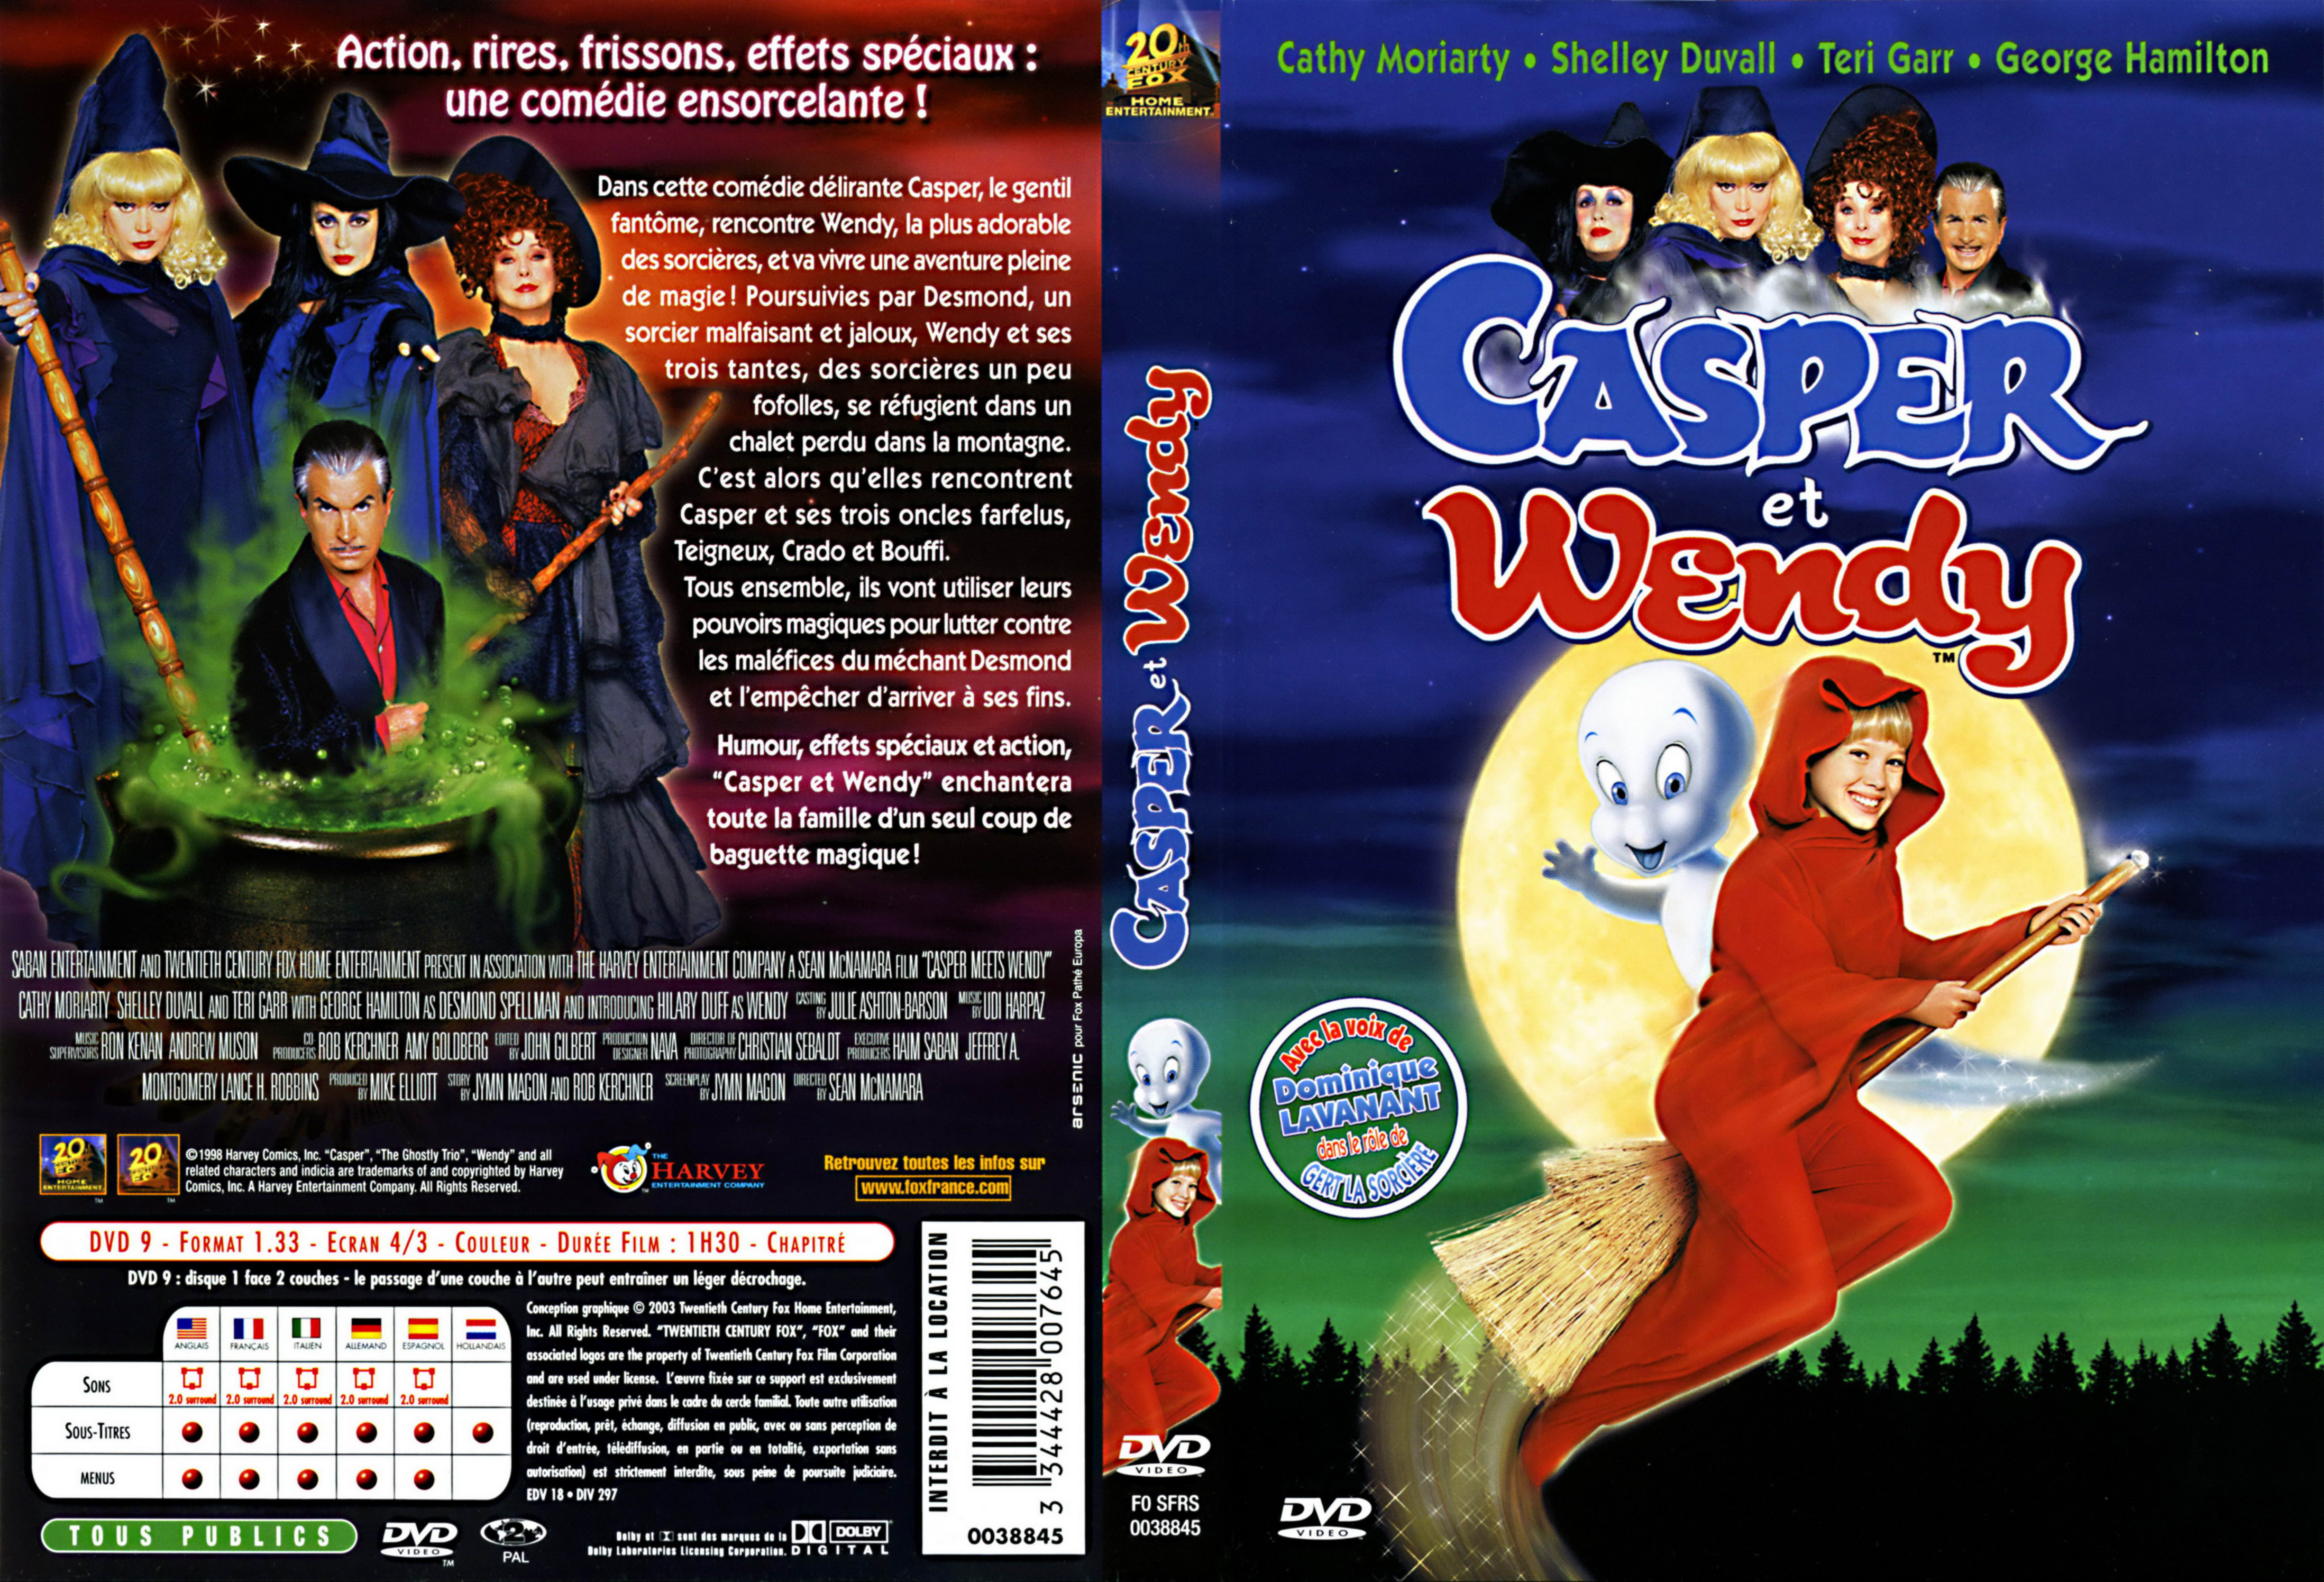 Jaquette DVD Casper et Wendy v2